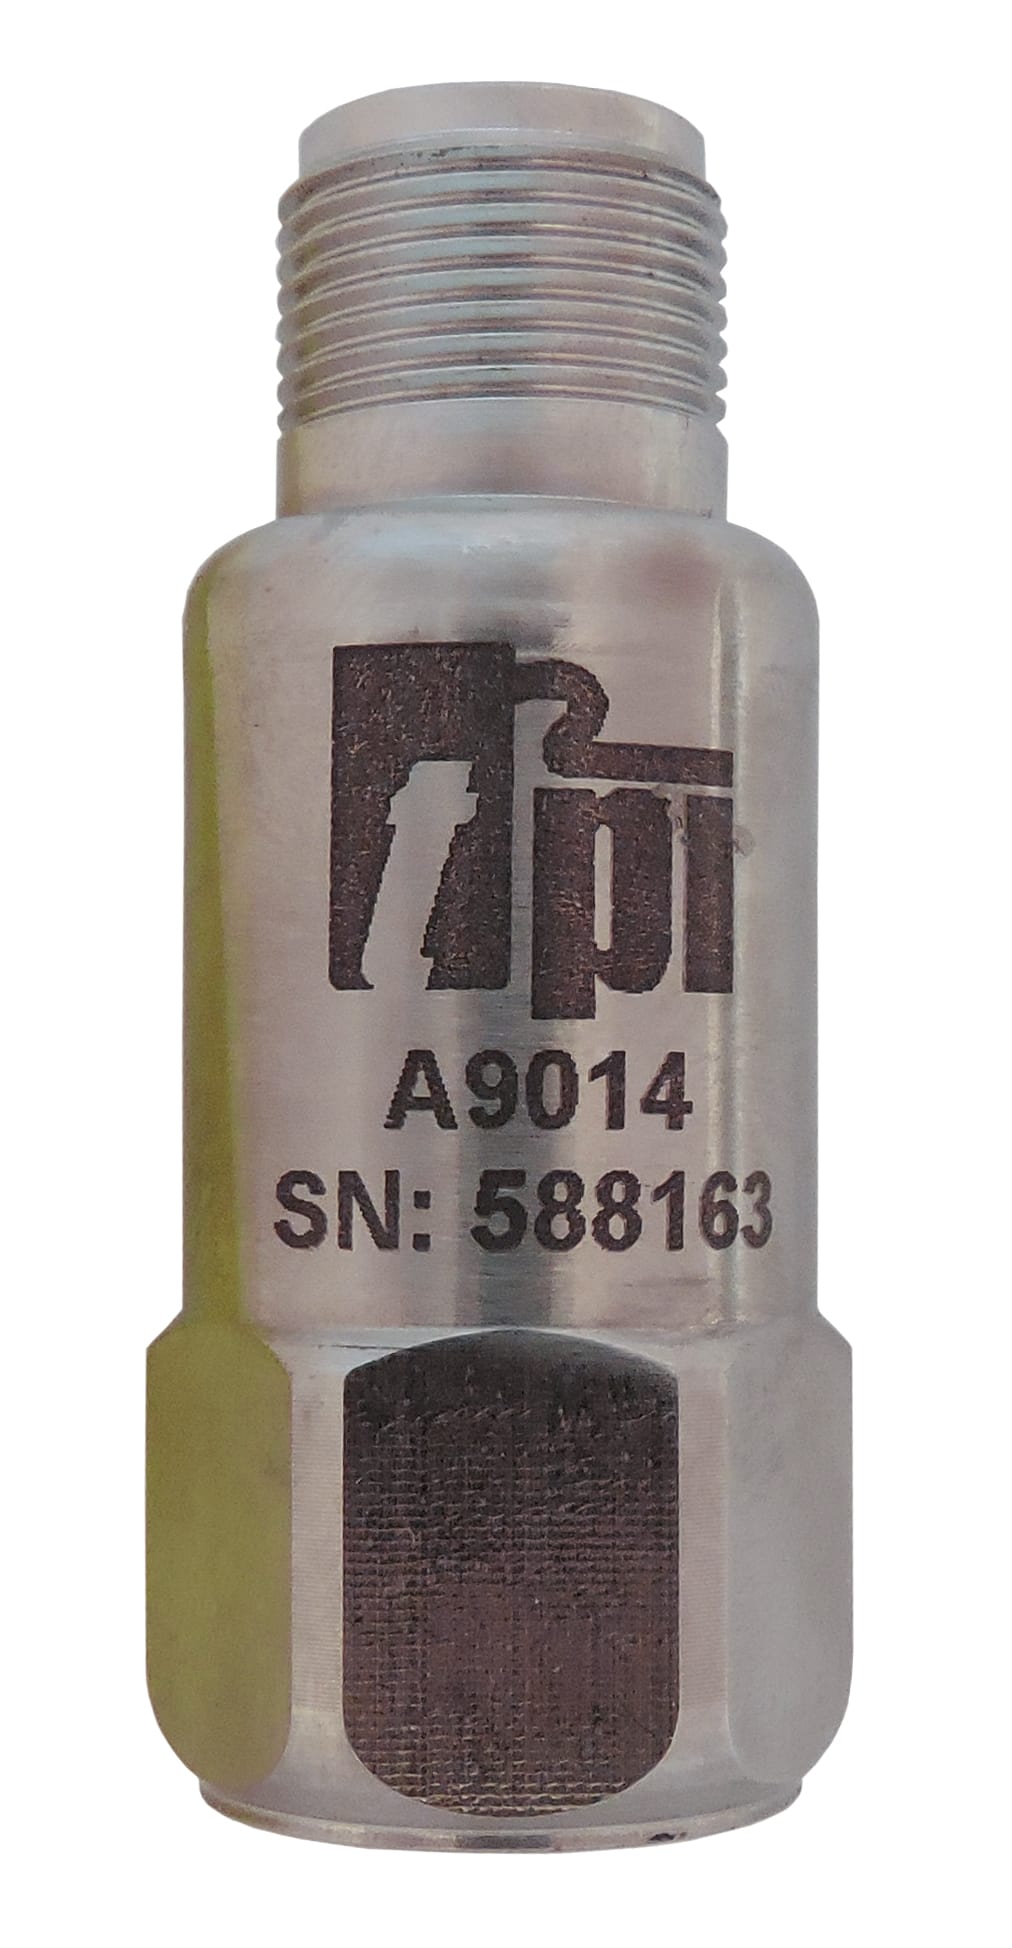 A9014 – 2 Pin Accelerometer